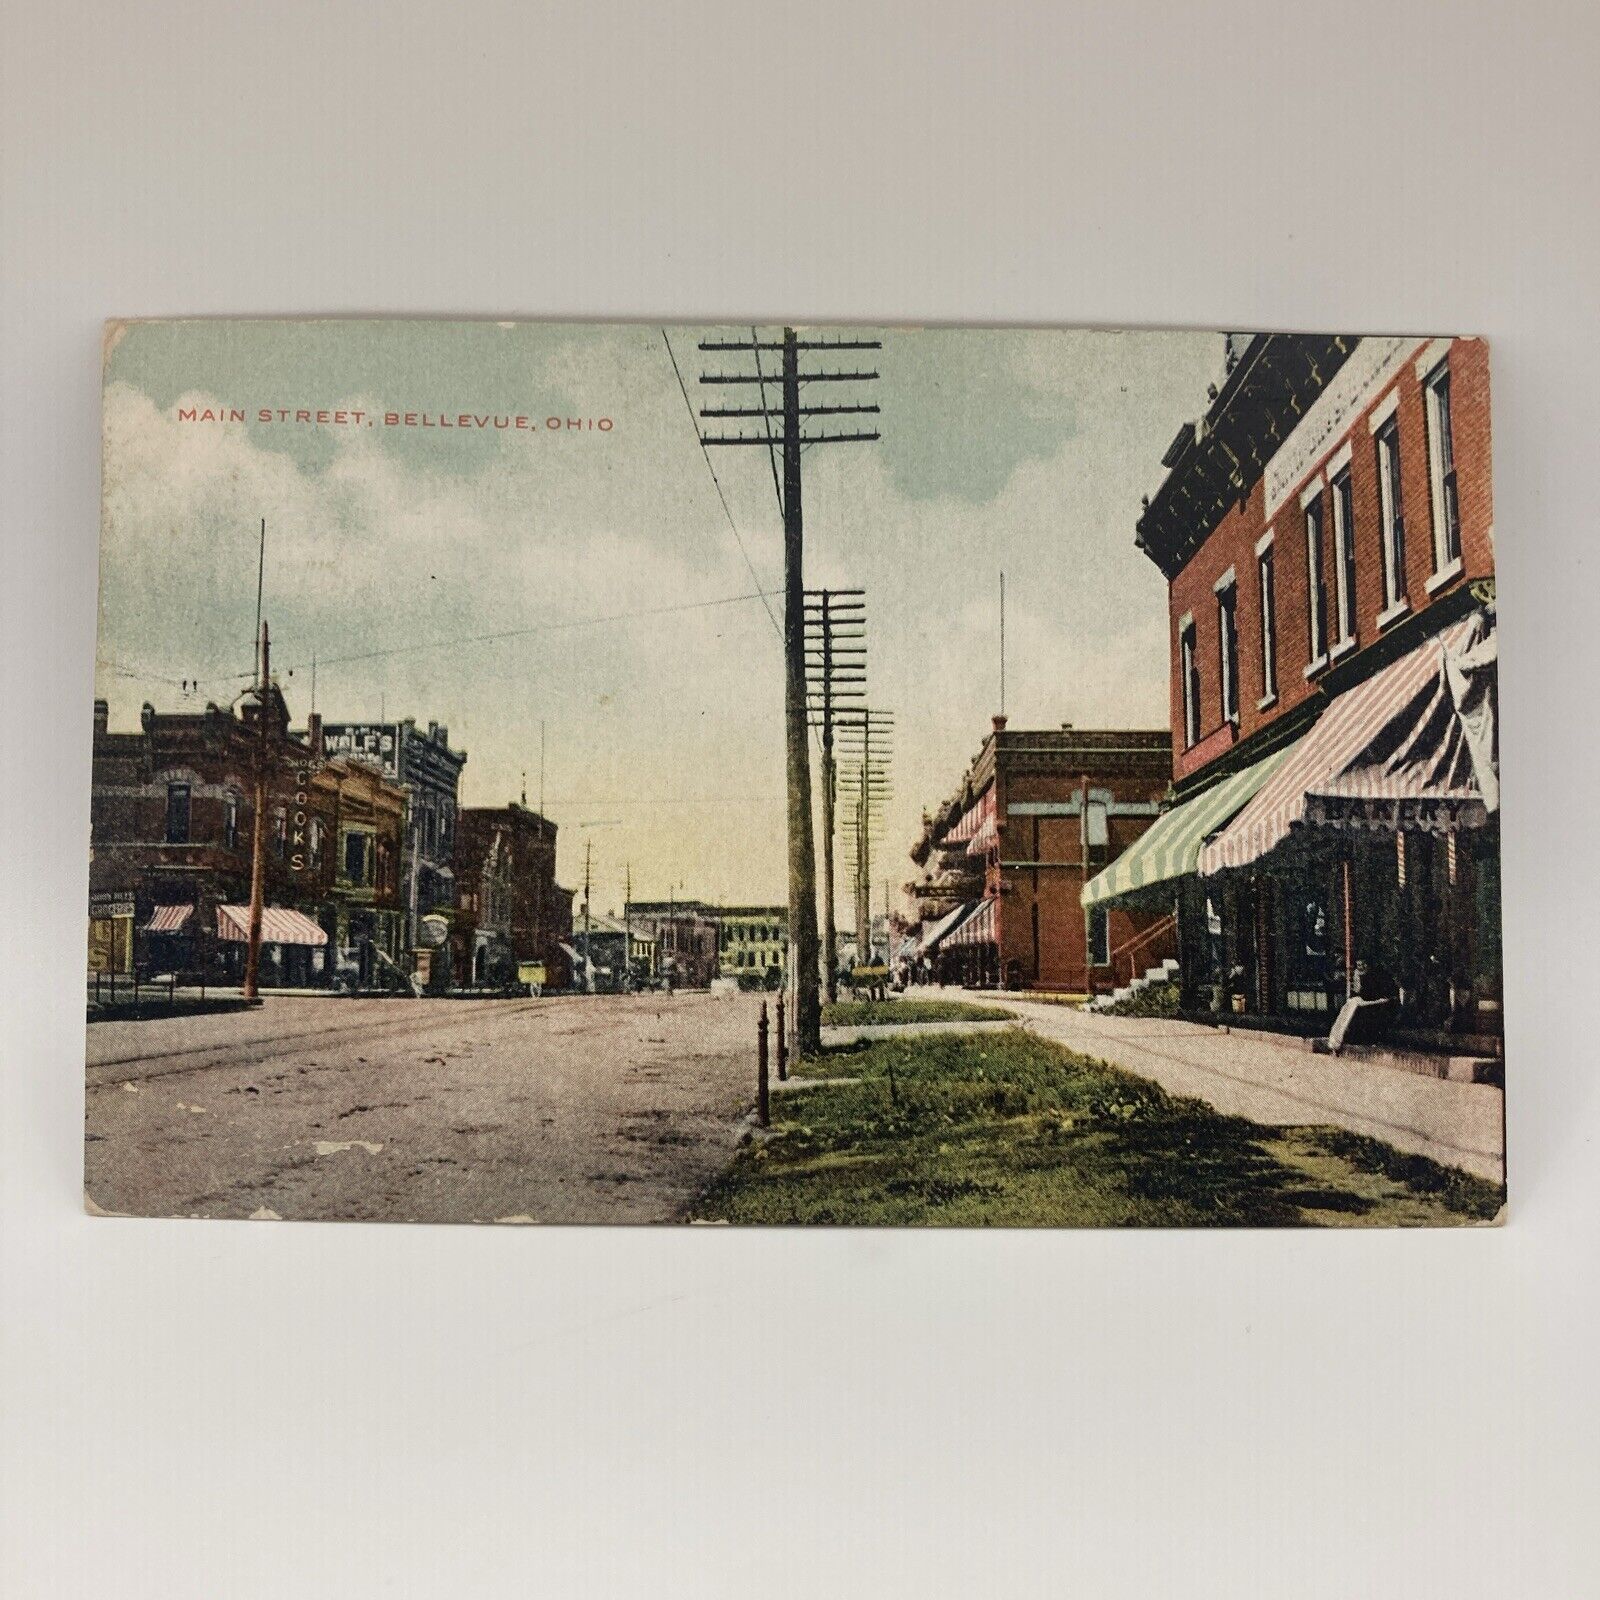 Vintage Postcard Main Street, Bellevue Ohio, Street View